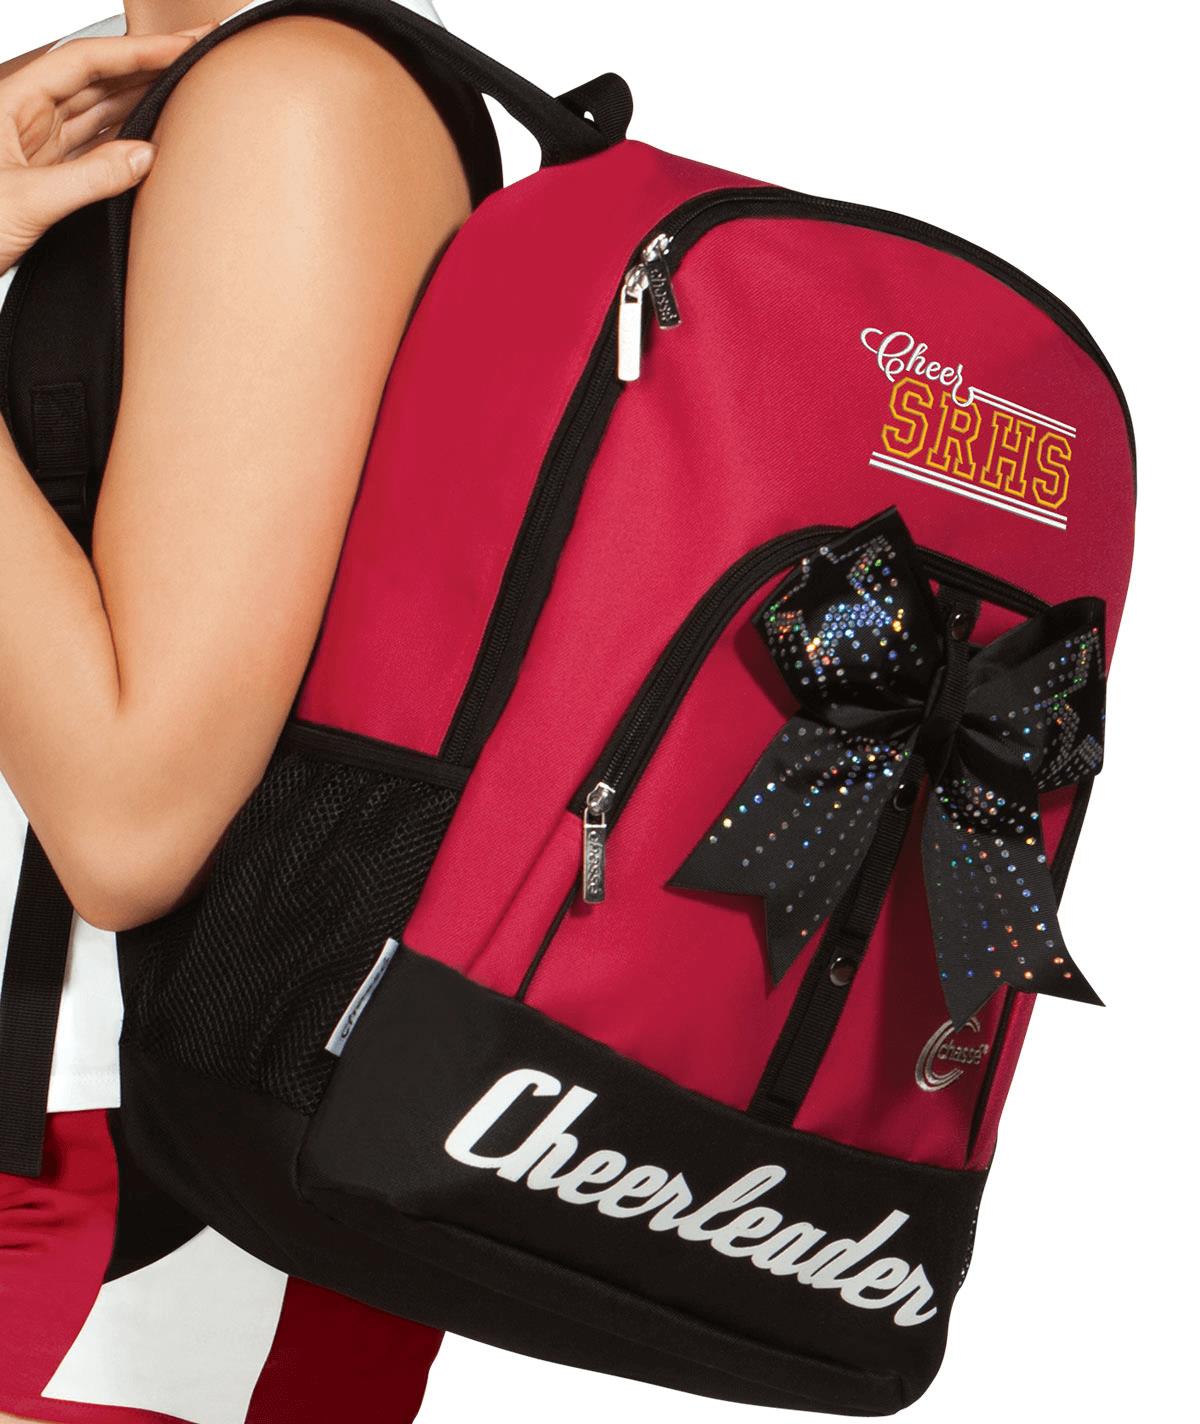 cheerleading backpack